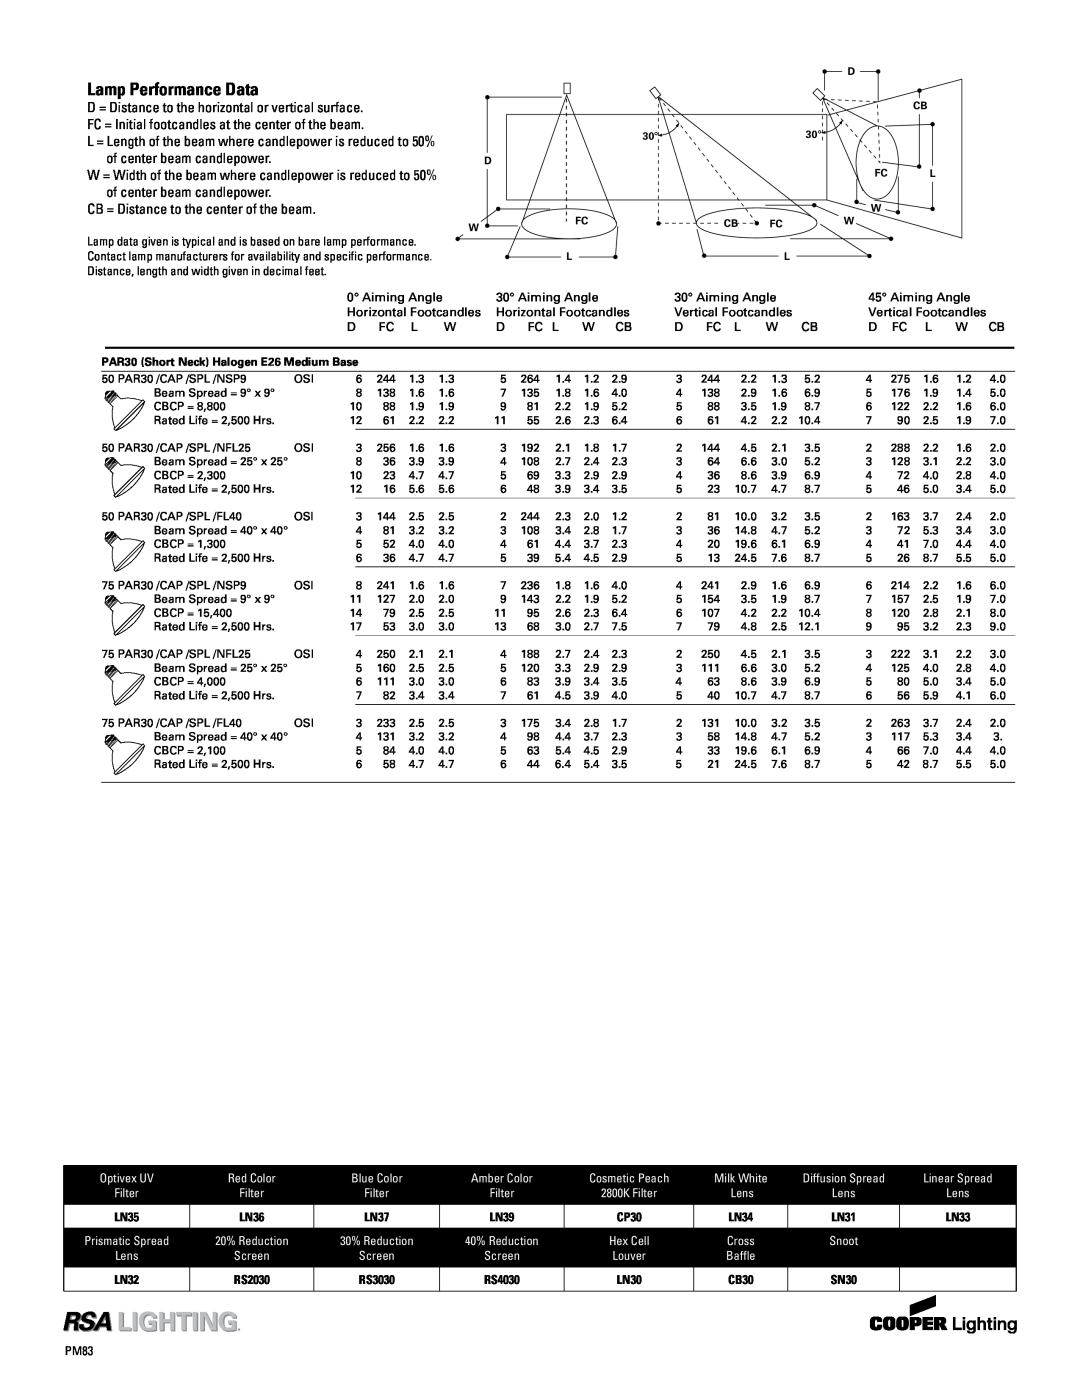 Cooper Lighting PM223ob, PM623ob, PM423ob, PM123ob specifications Lamp Performance Data 